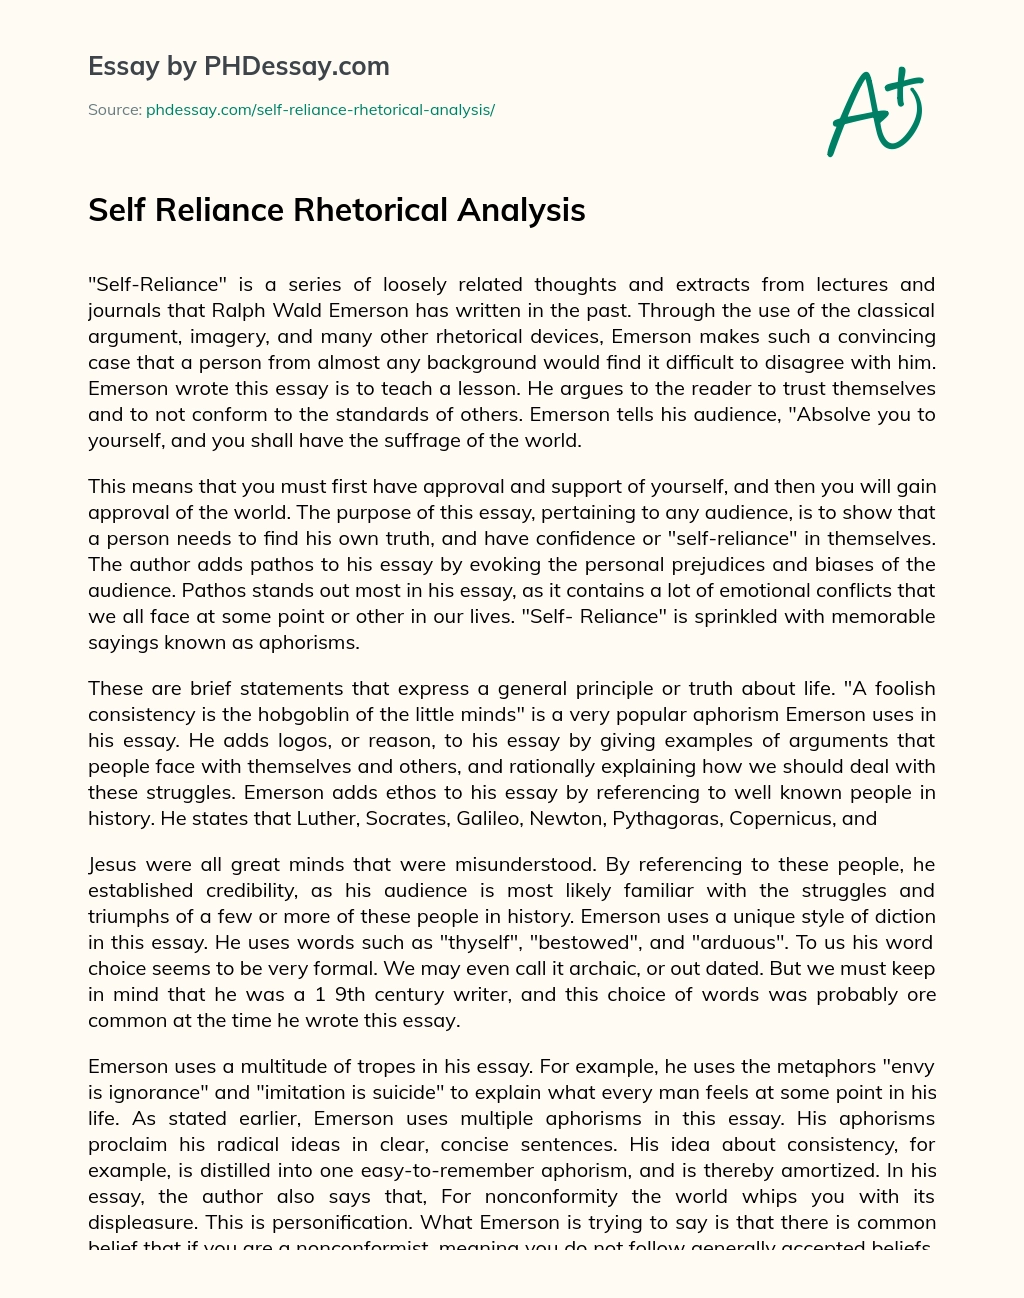 Self Reliance Rhetorical Analysis